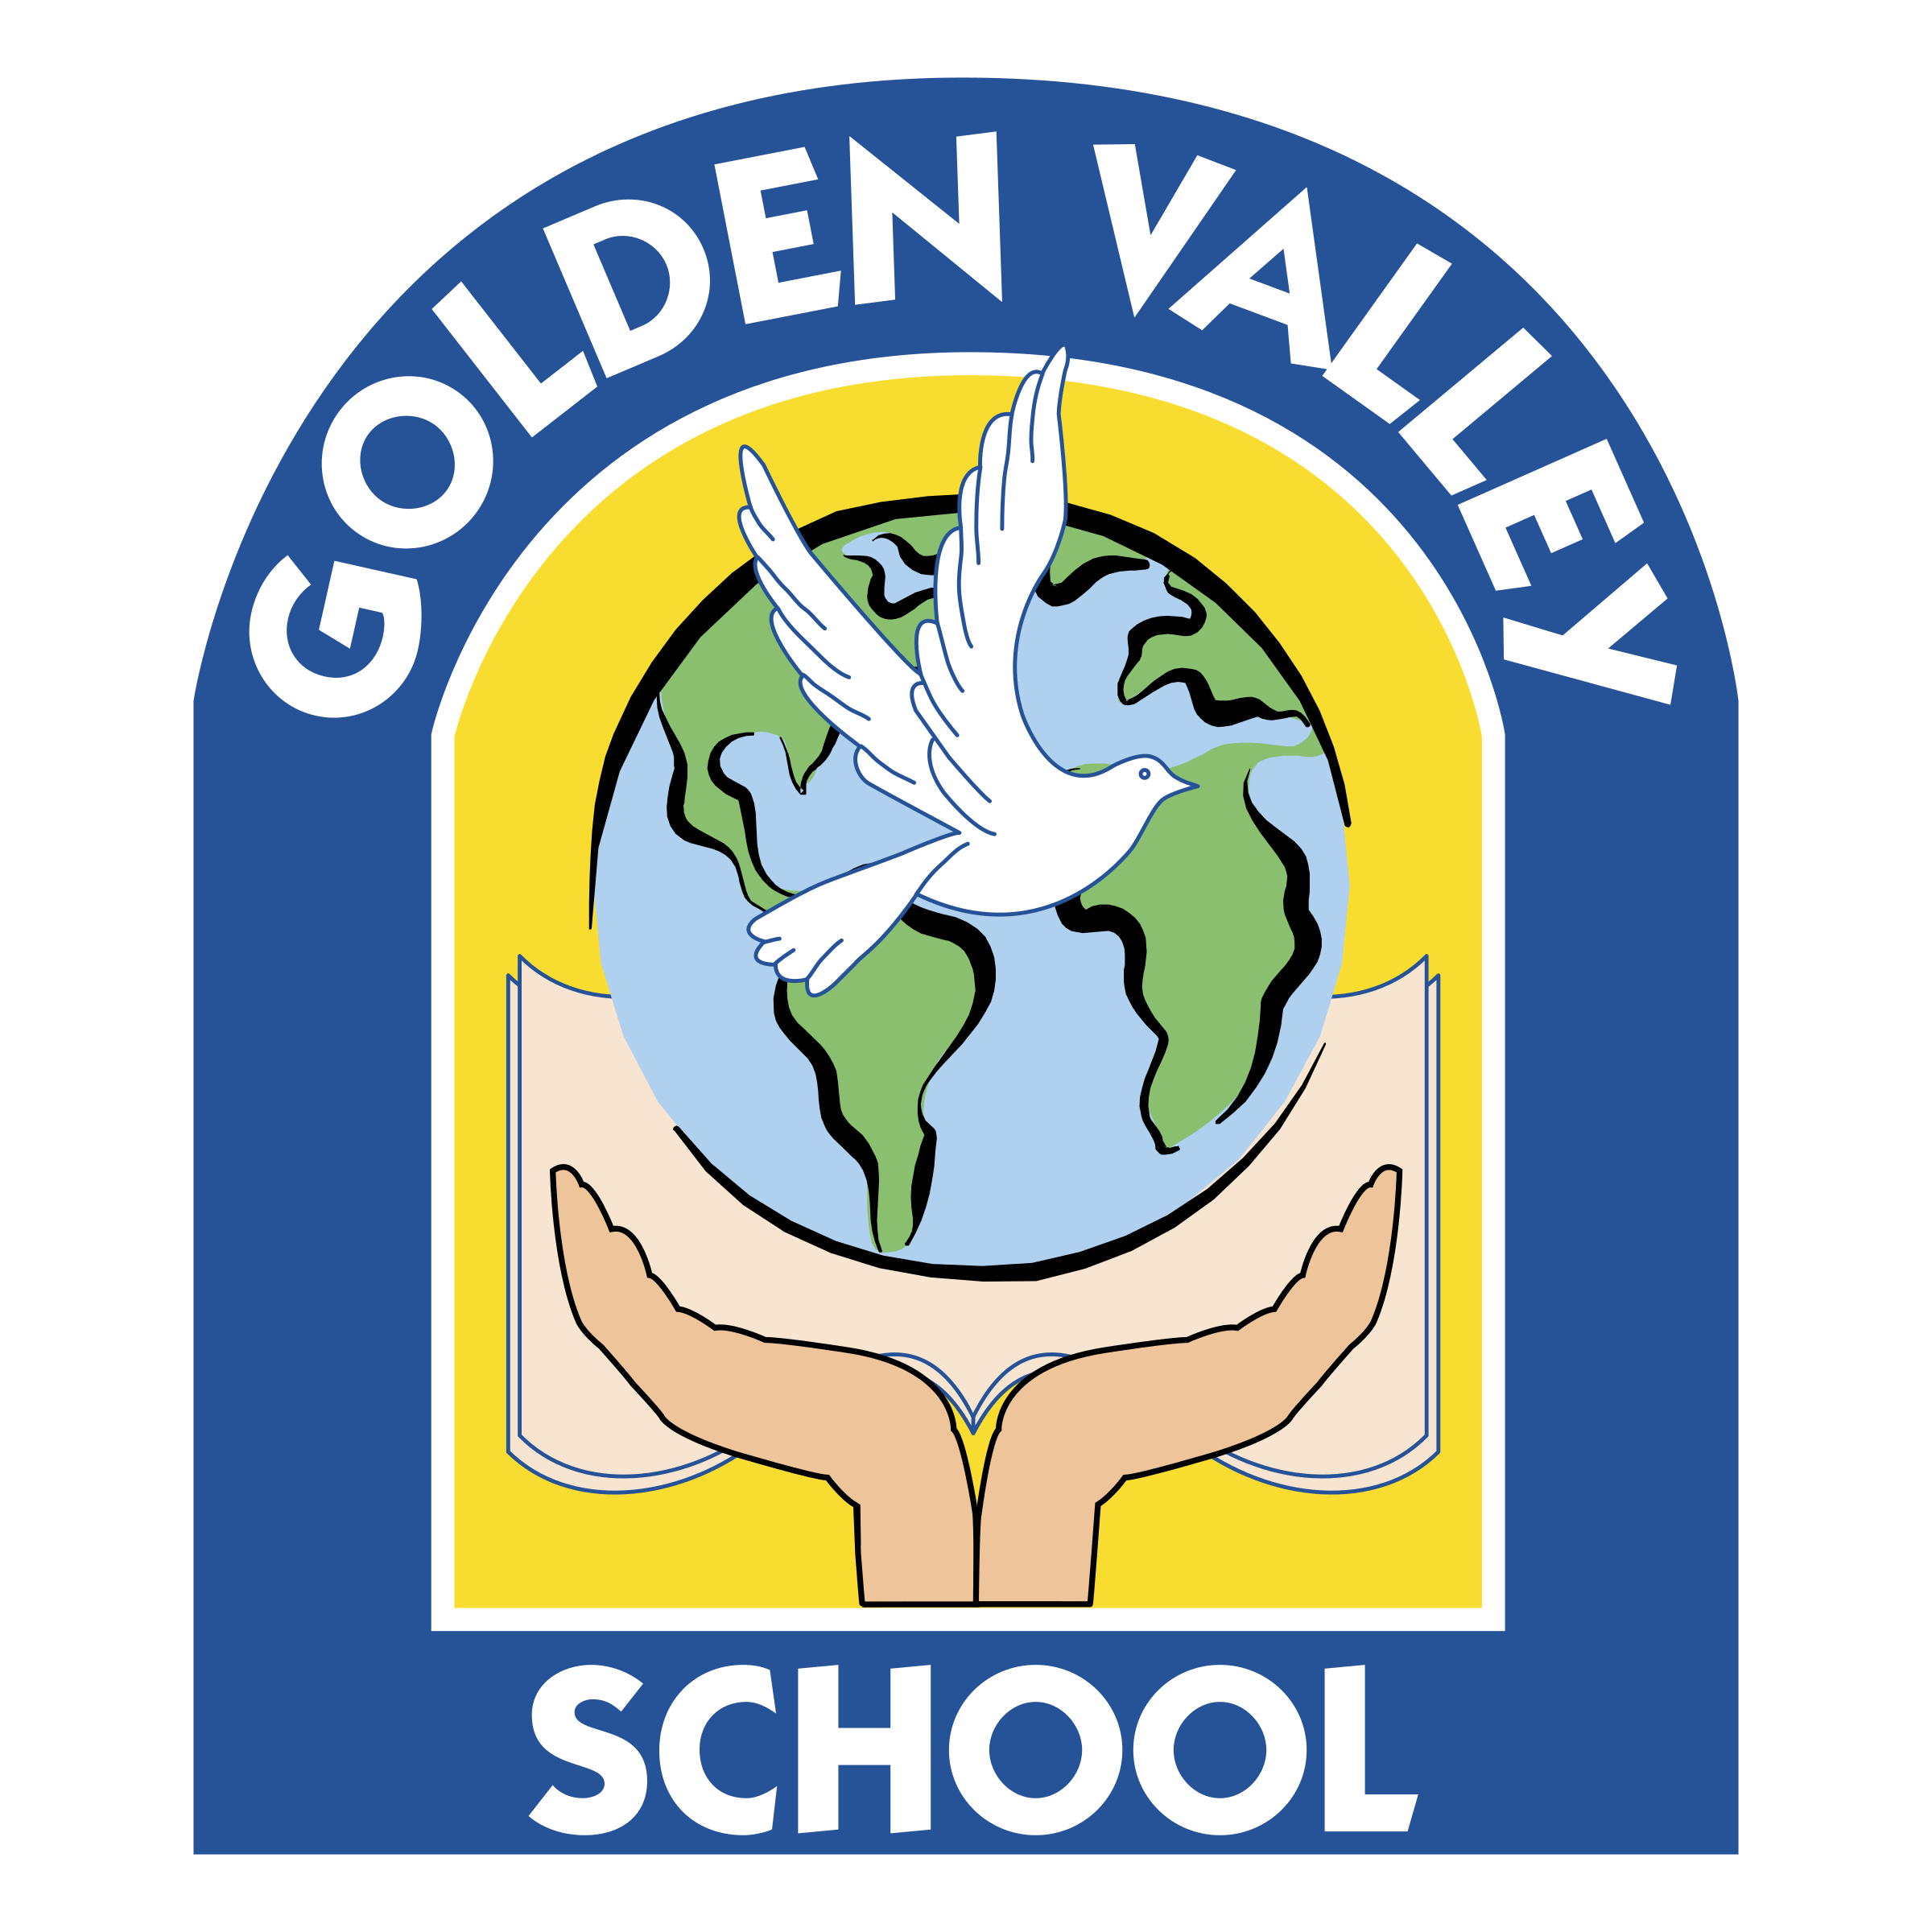 Golden School Logo - Golden Valley School Logo PNG Transparent & SVG Vector - Freebie Supply